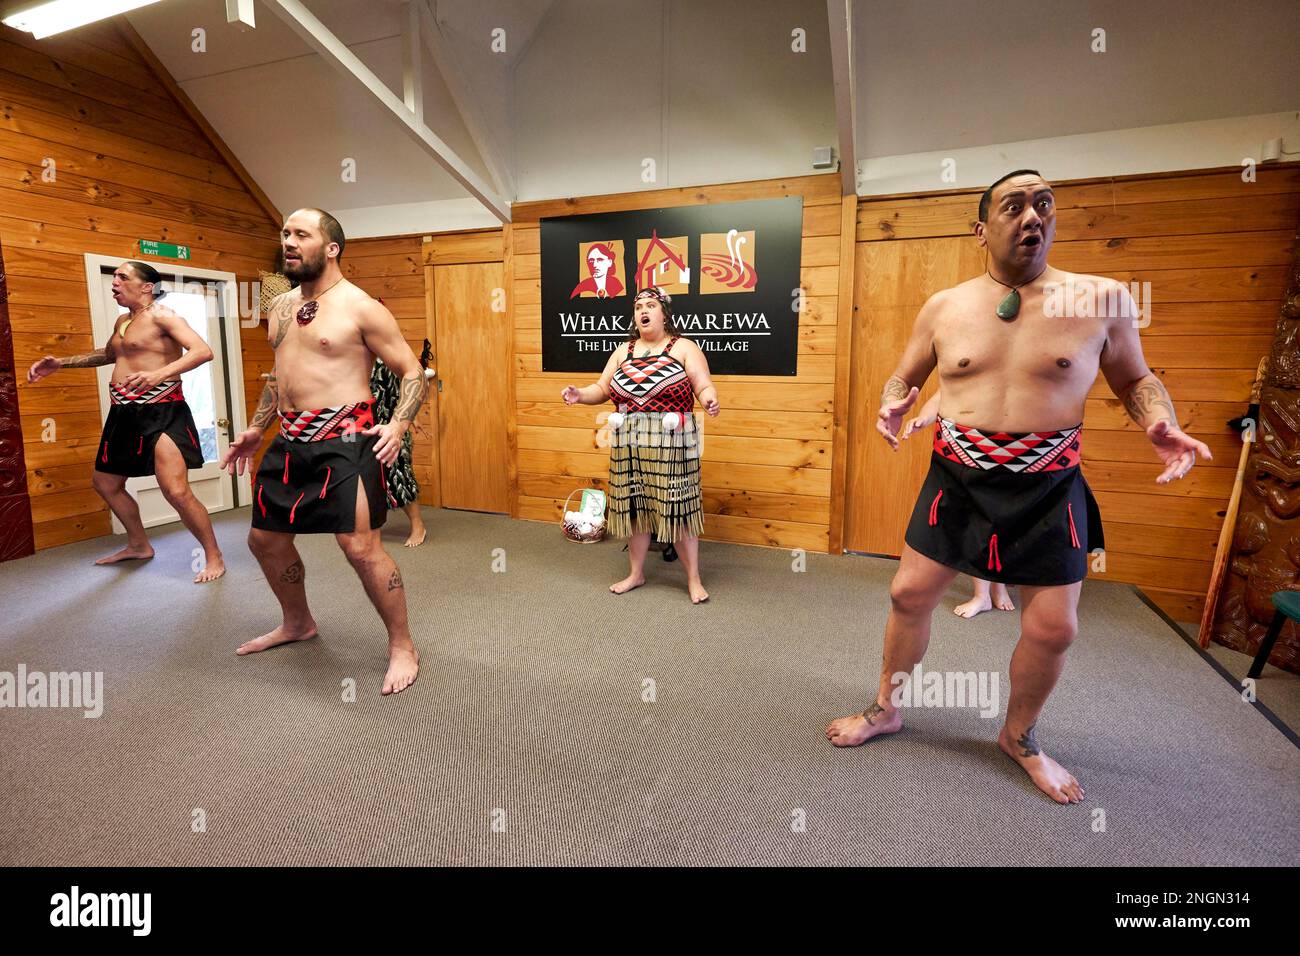 Whakarewarewa Maori Village. Haka traditionelle Aufführung Tanz Stockfoto